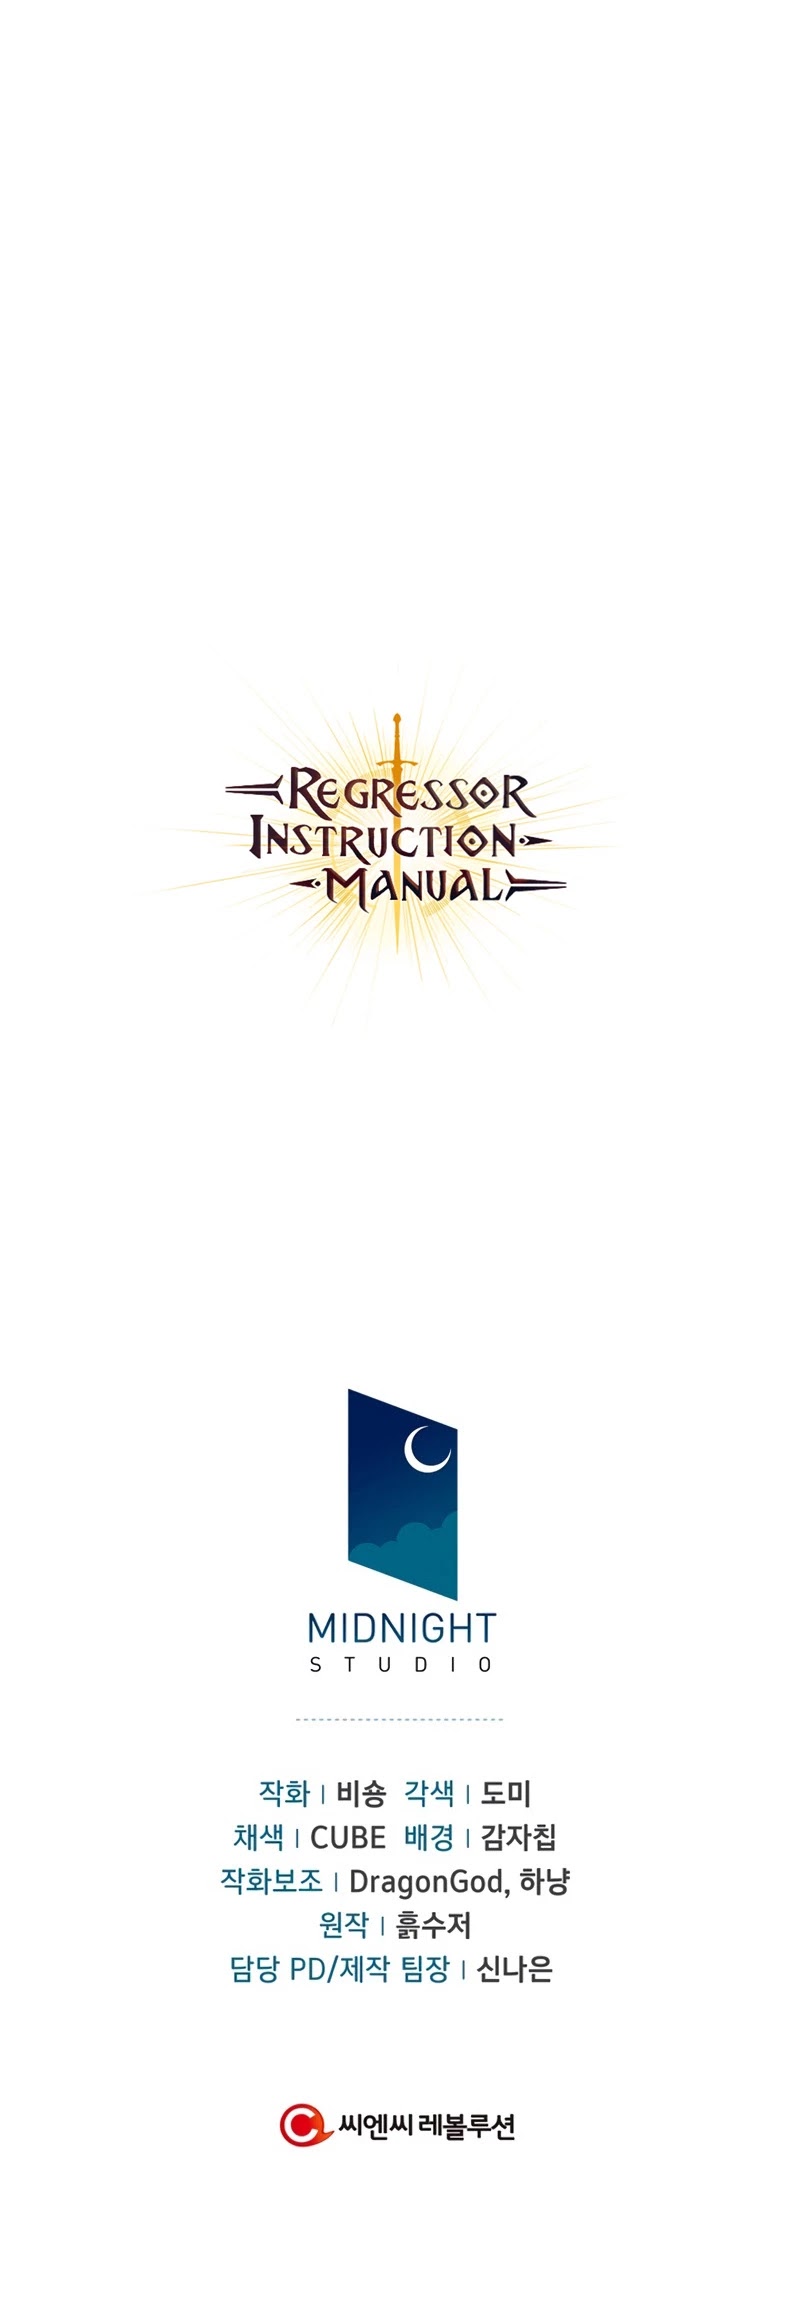 Regressor Instruction Manual, Chapter 31 image 81